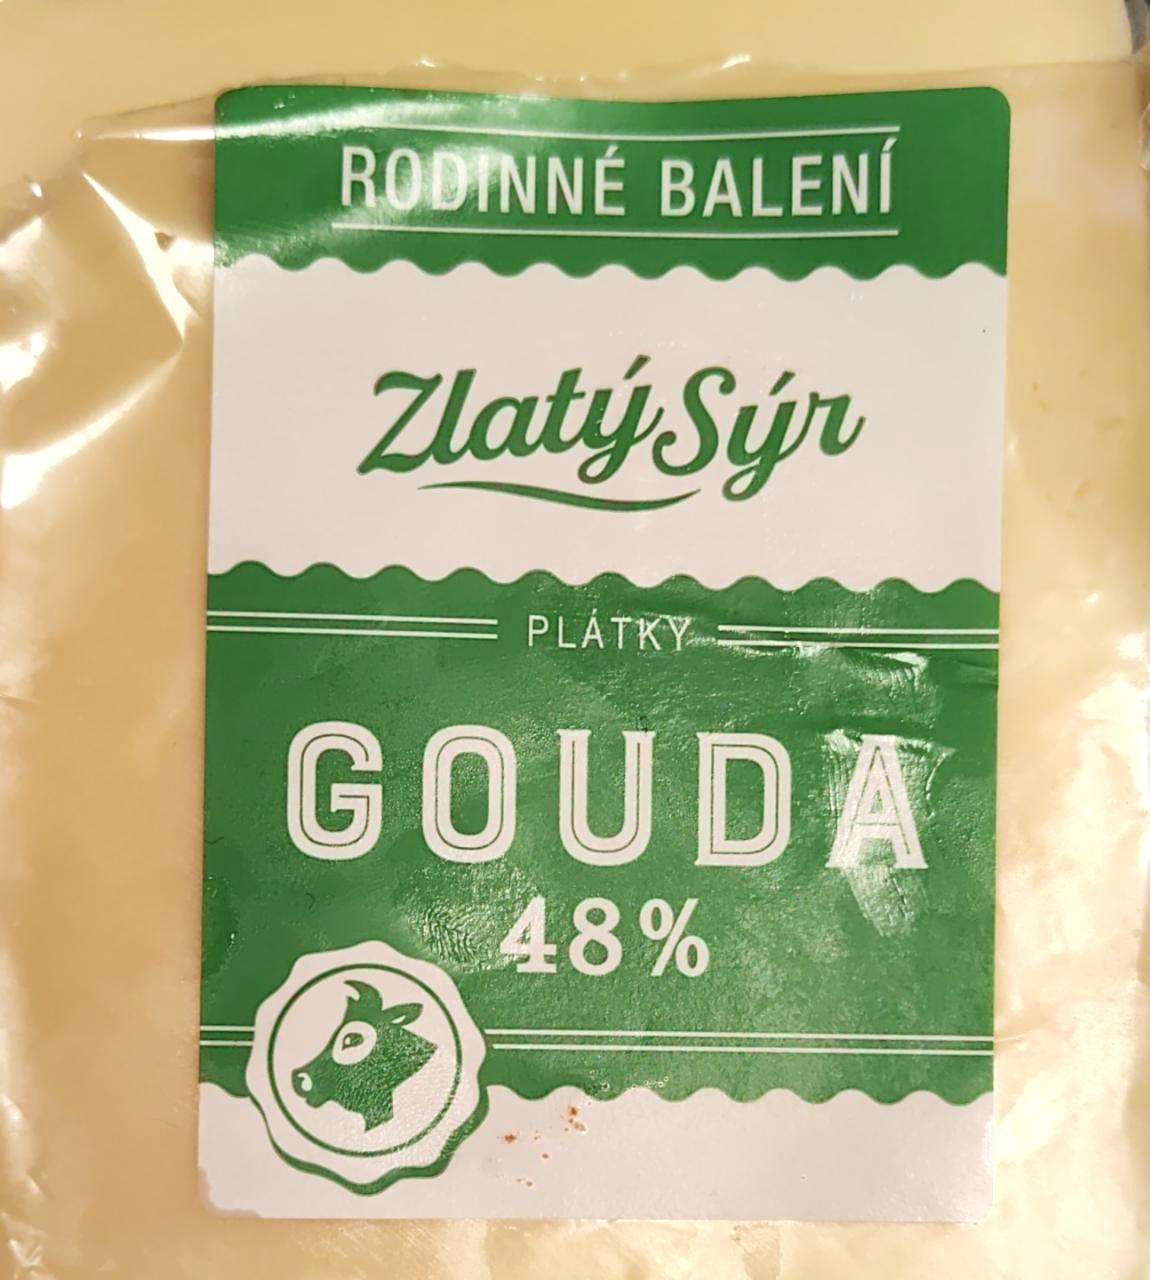 Képek - Gouda sajt 48% Zlatý sýr